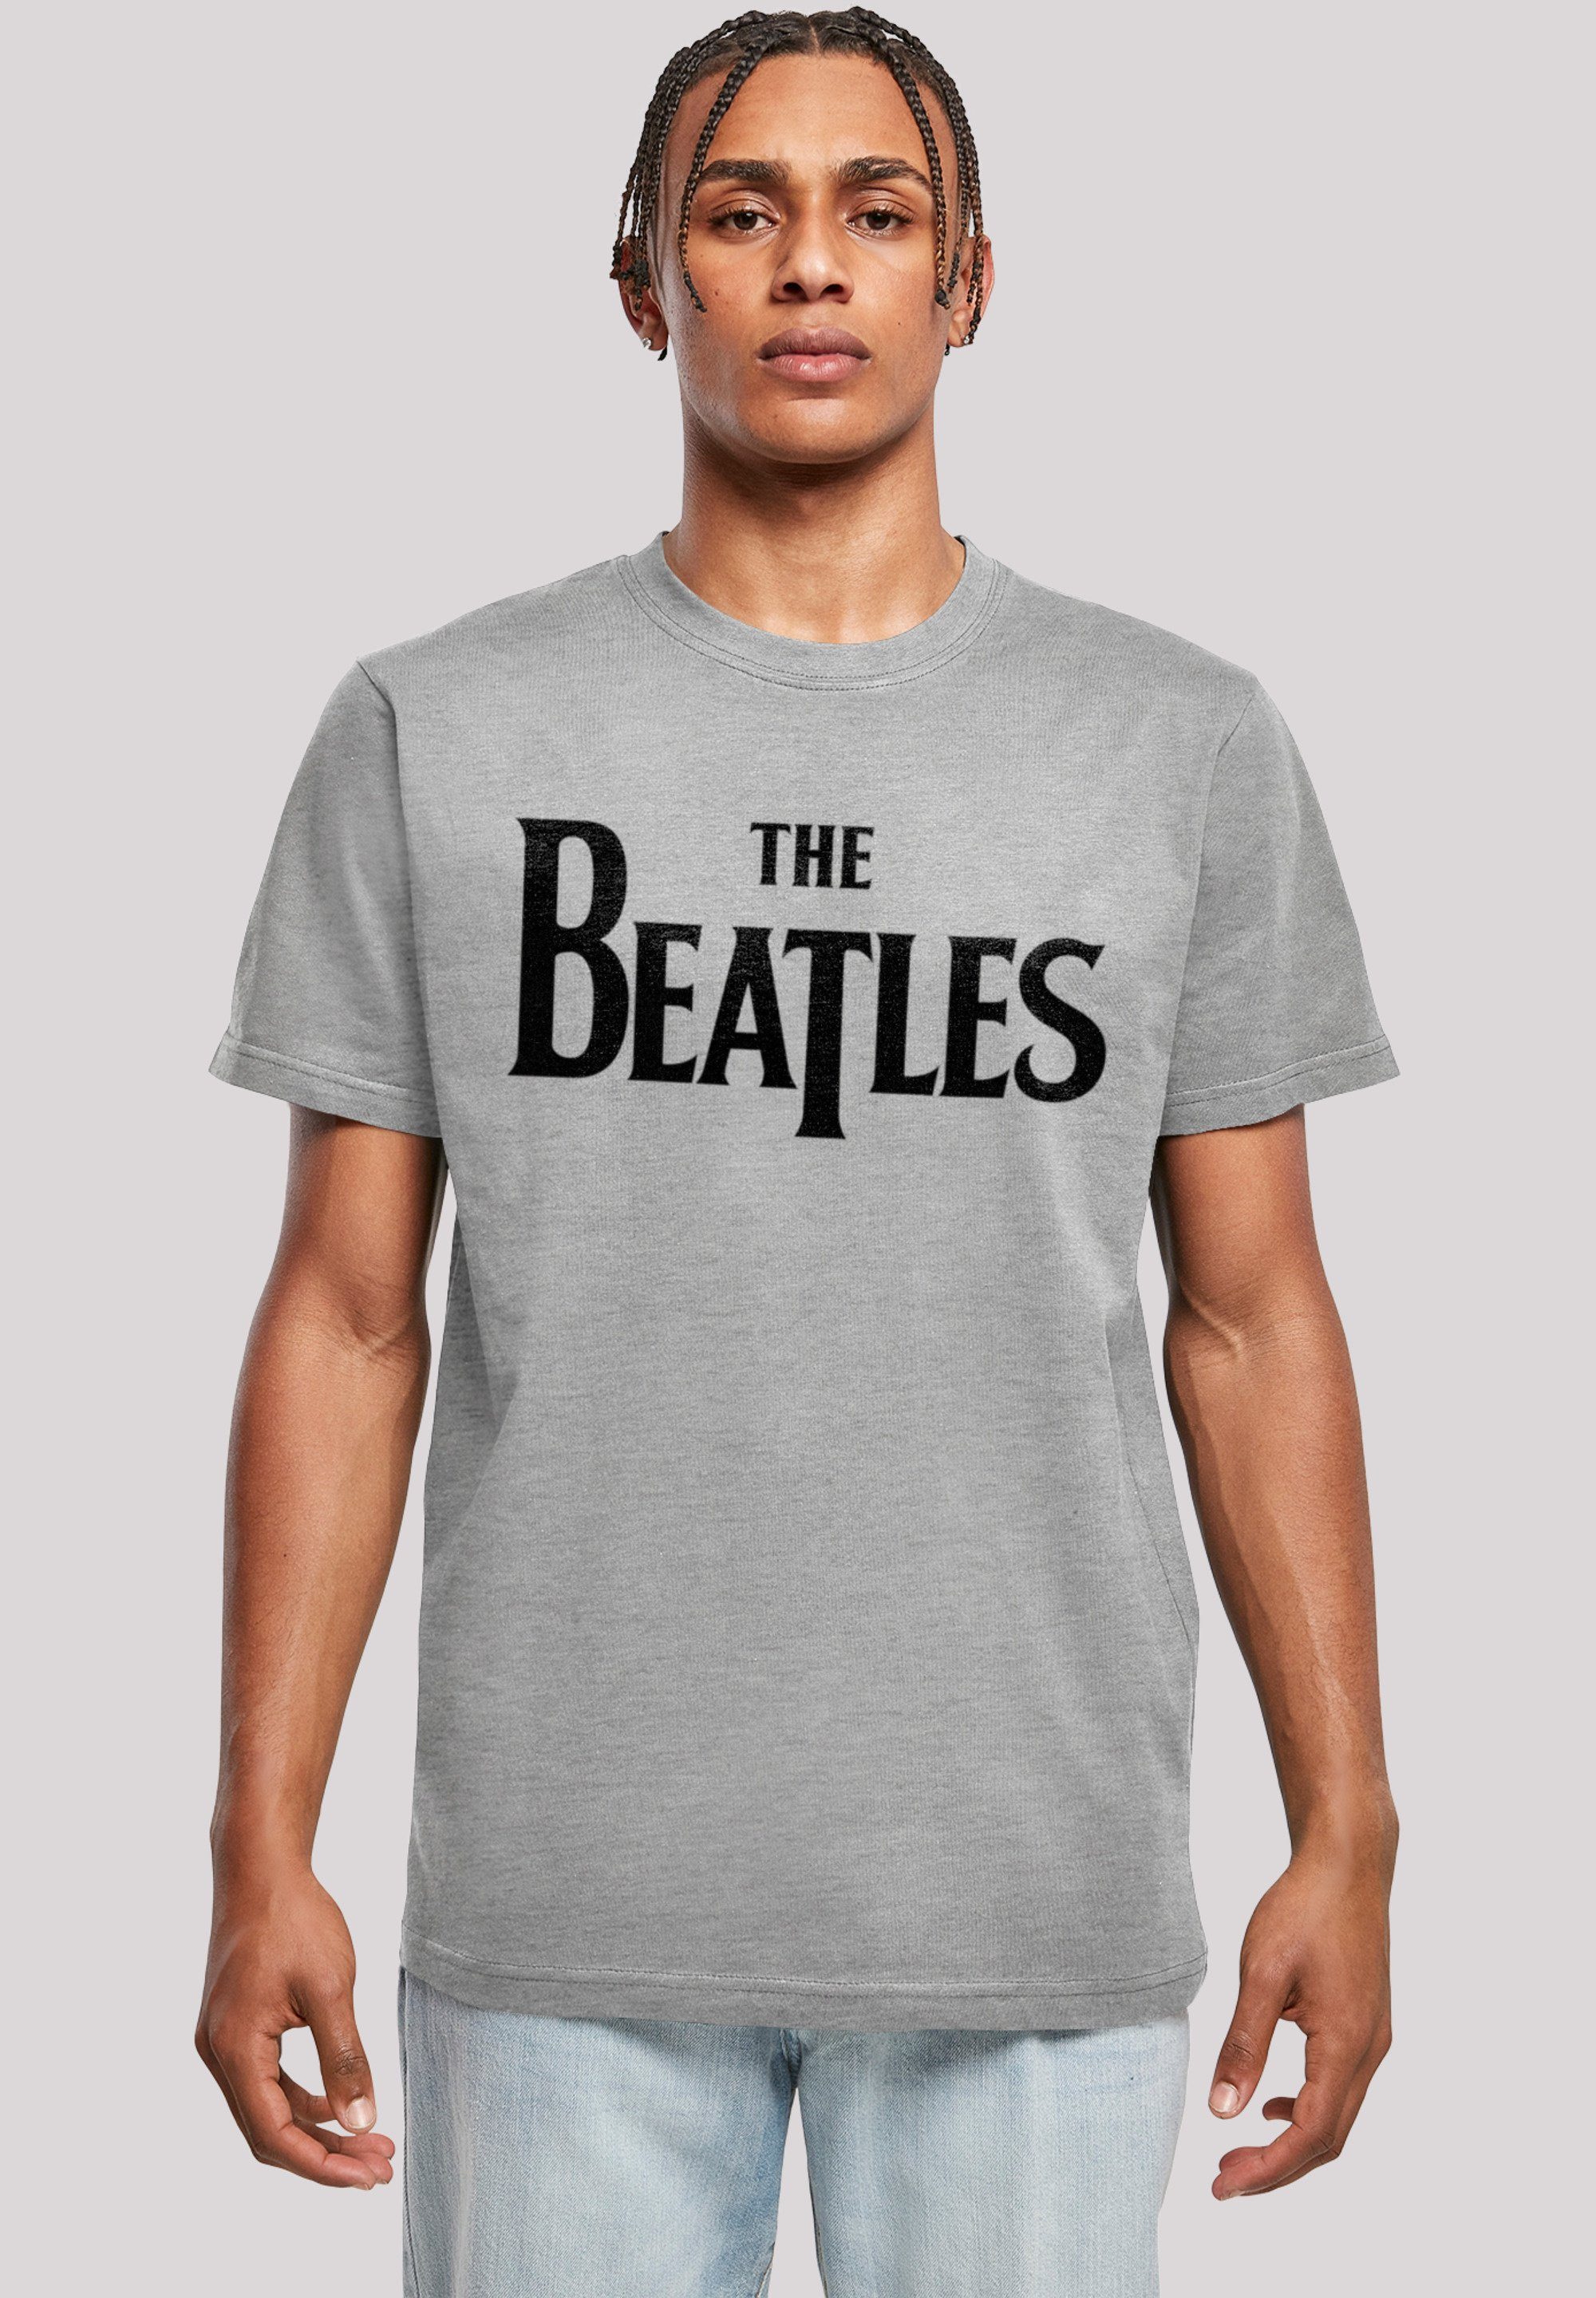 Logo Print Band T Black F4NT4STIC grey T-Shirt Beatles heather The Drop